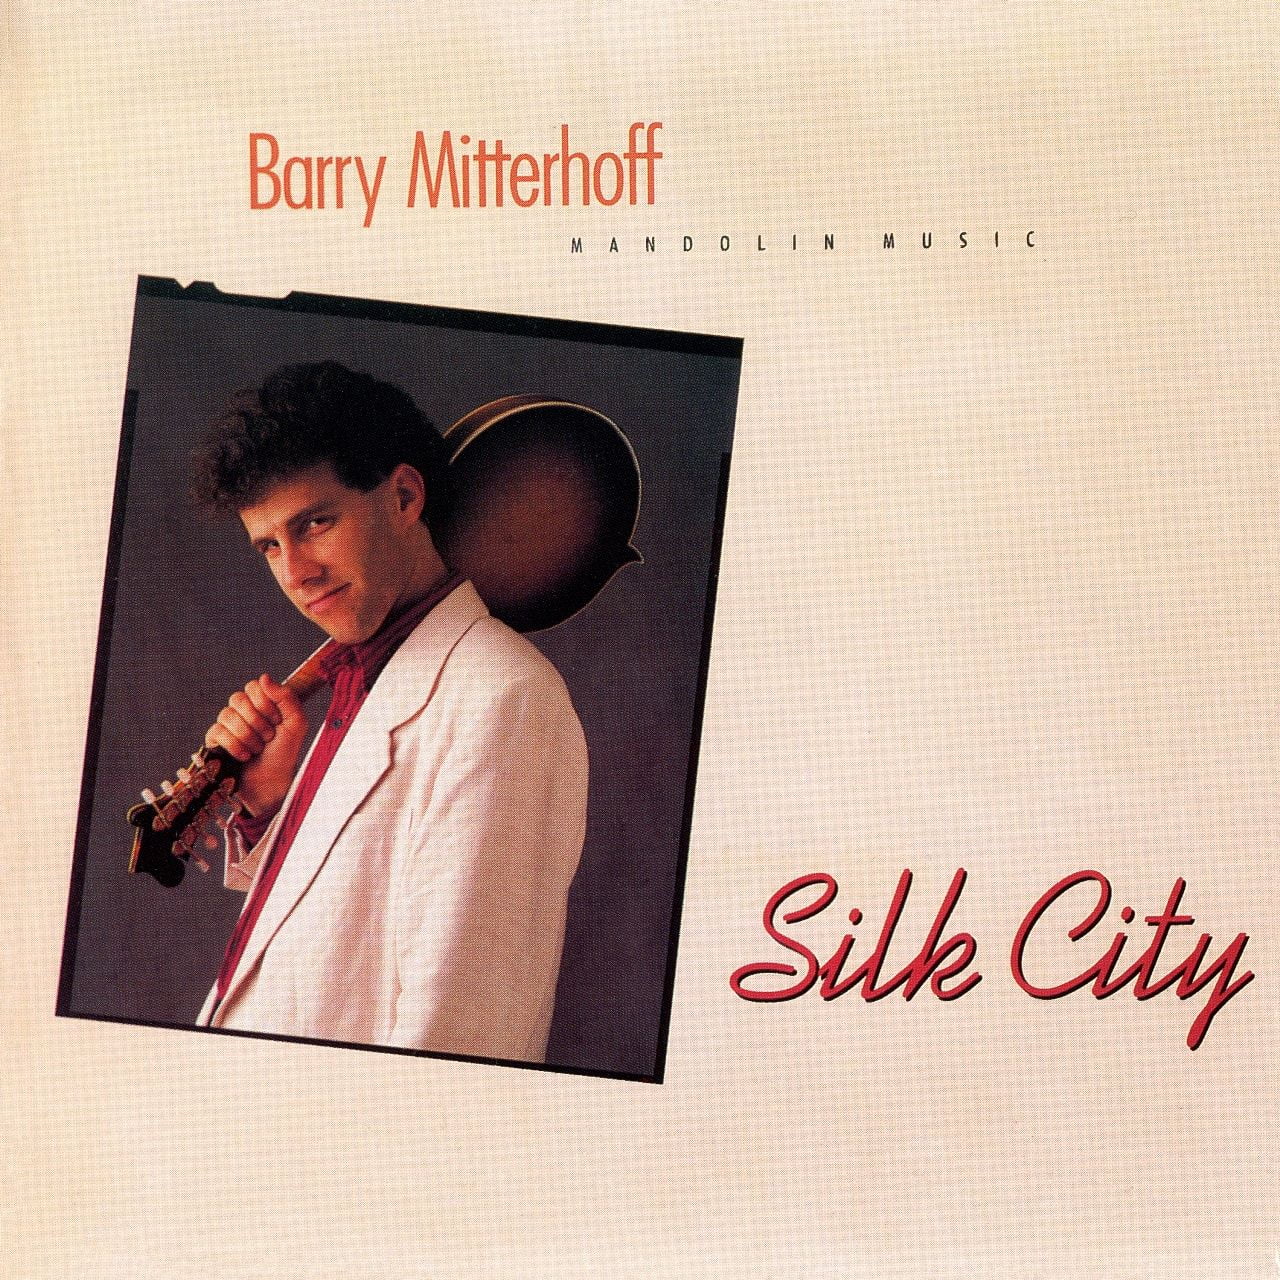 Barry Mitterhoff - Silk City cover album